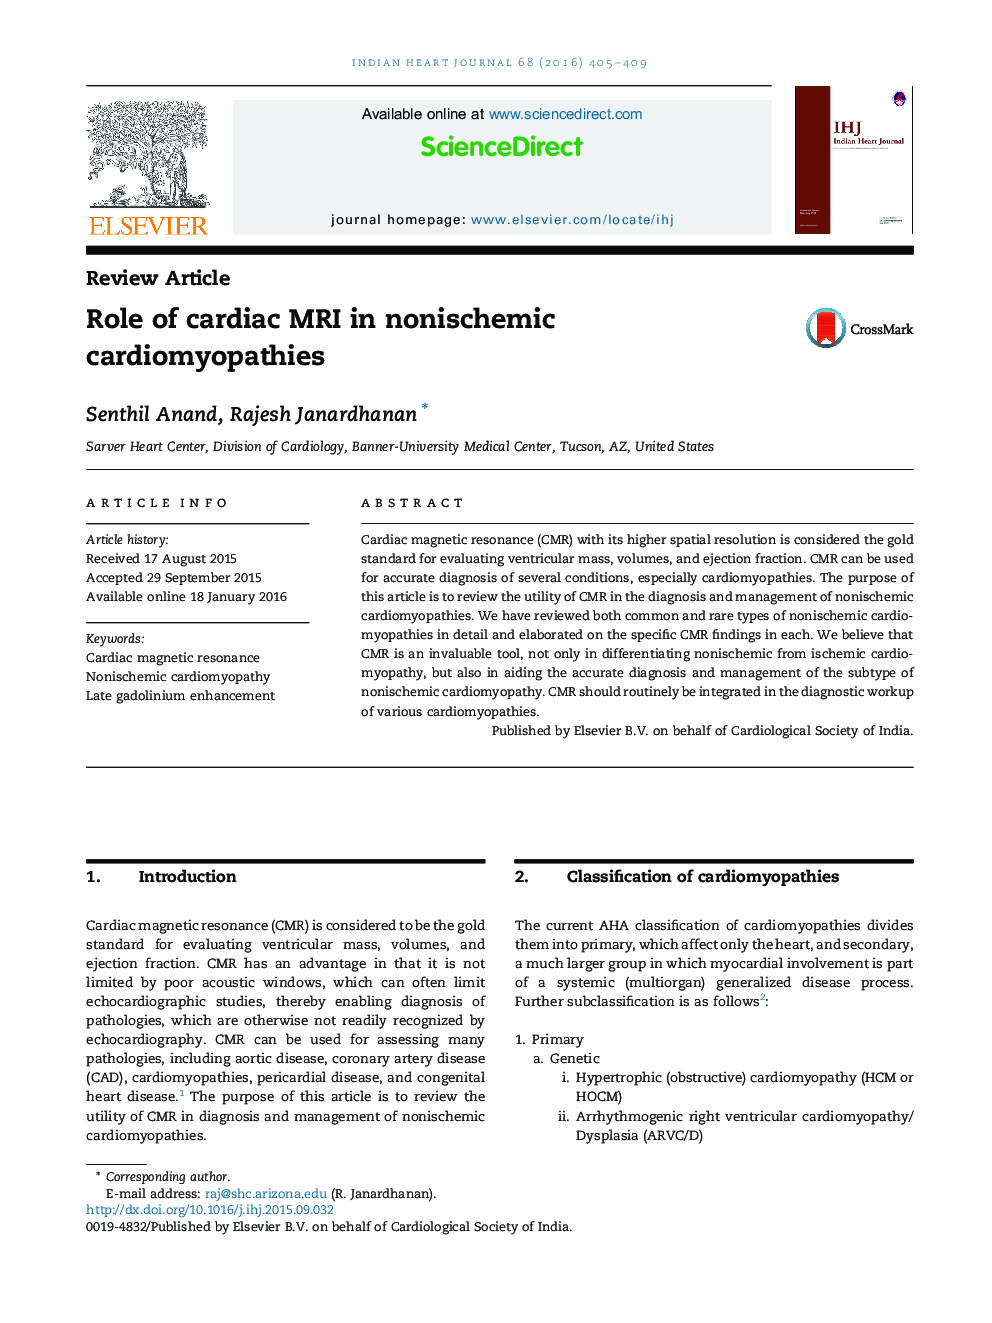 Role of cardiac MRI in nonischemic cardiomyopathies